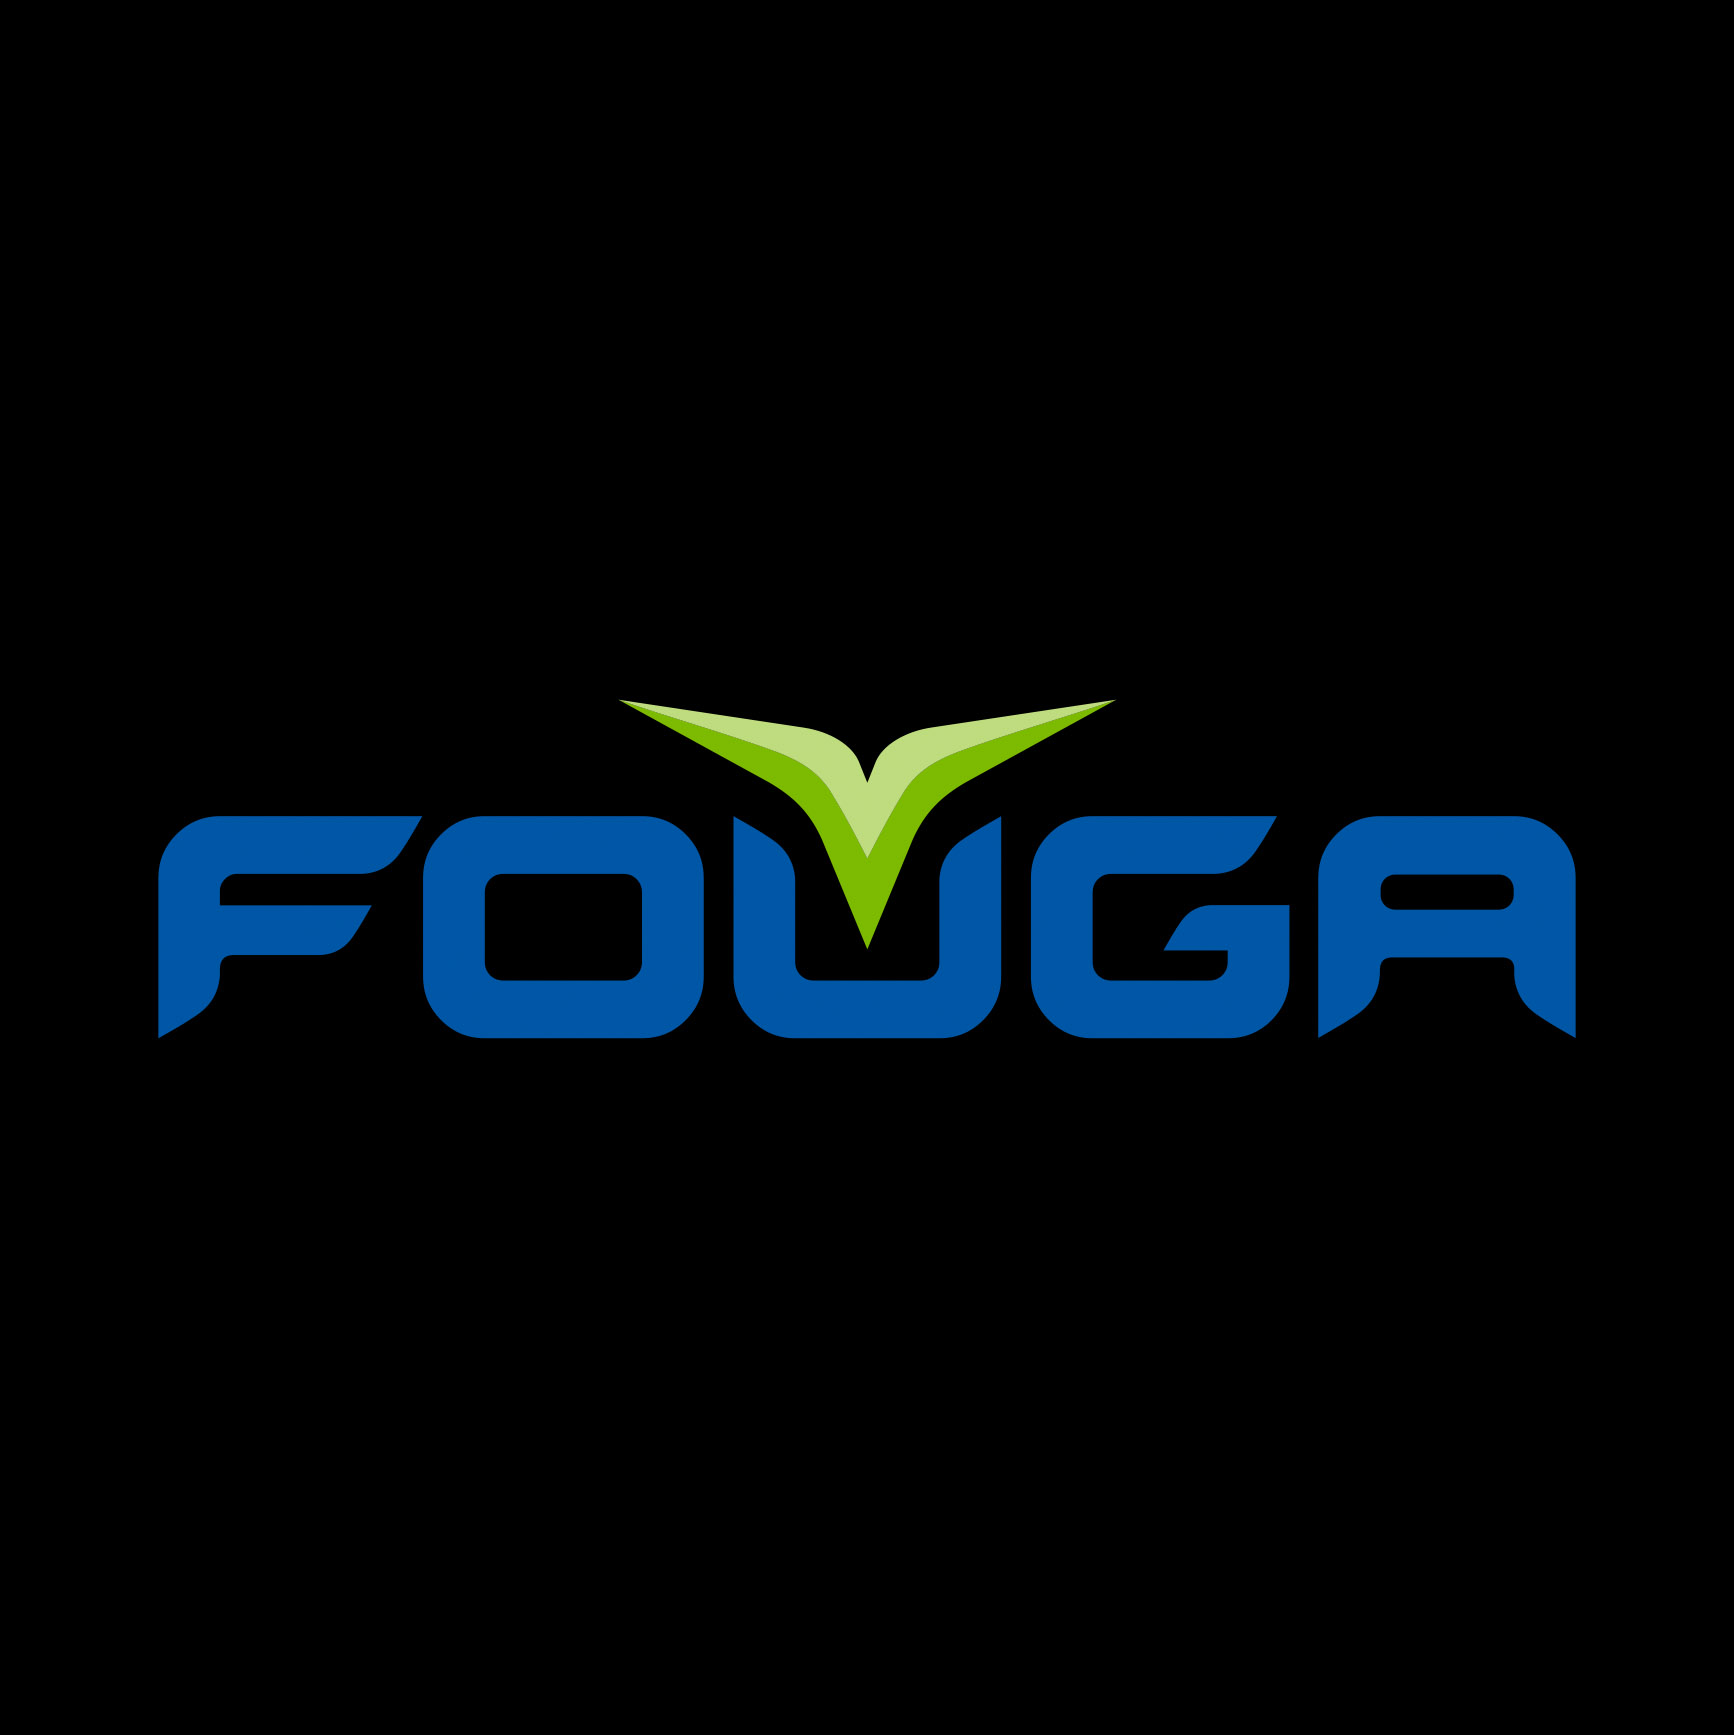 Fouga logo Therwiz Design